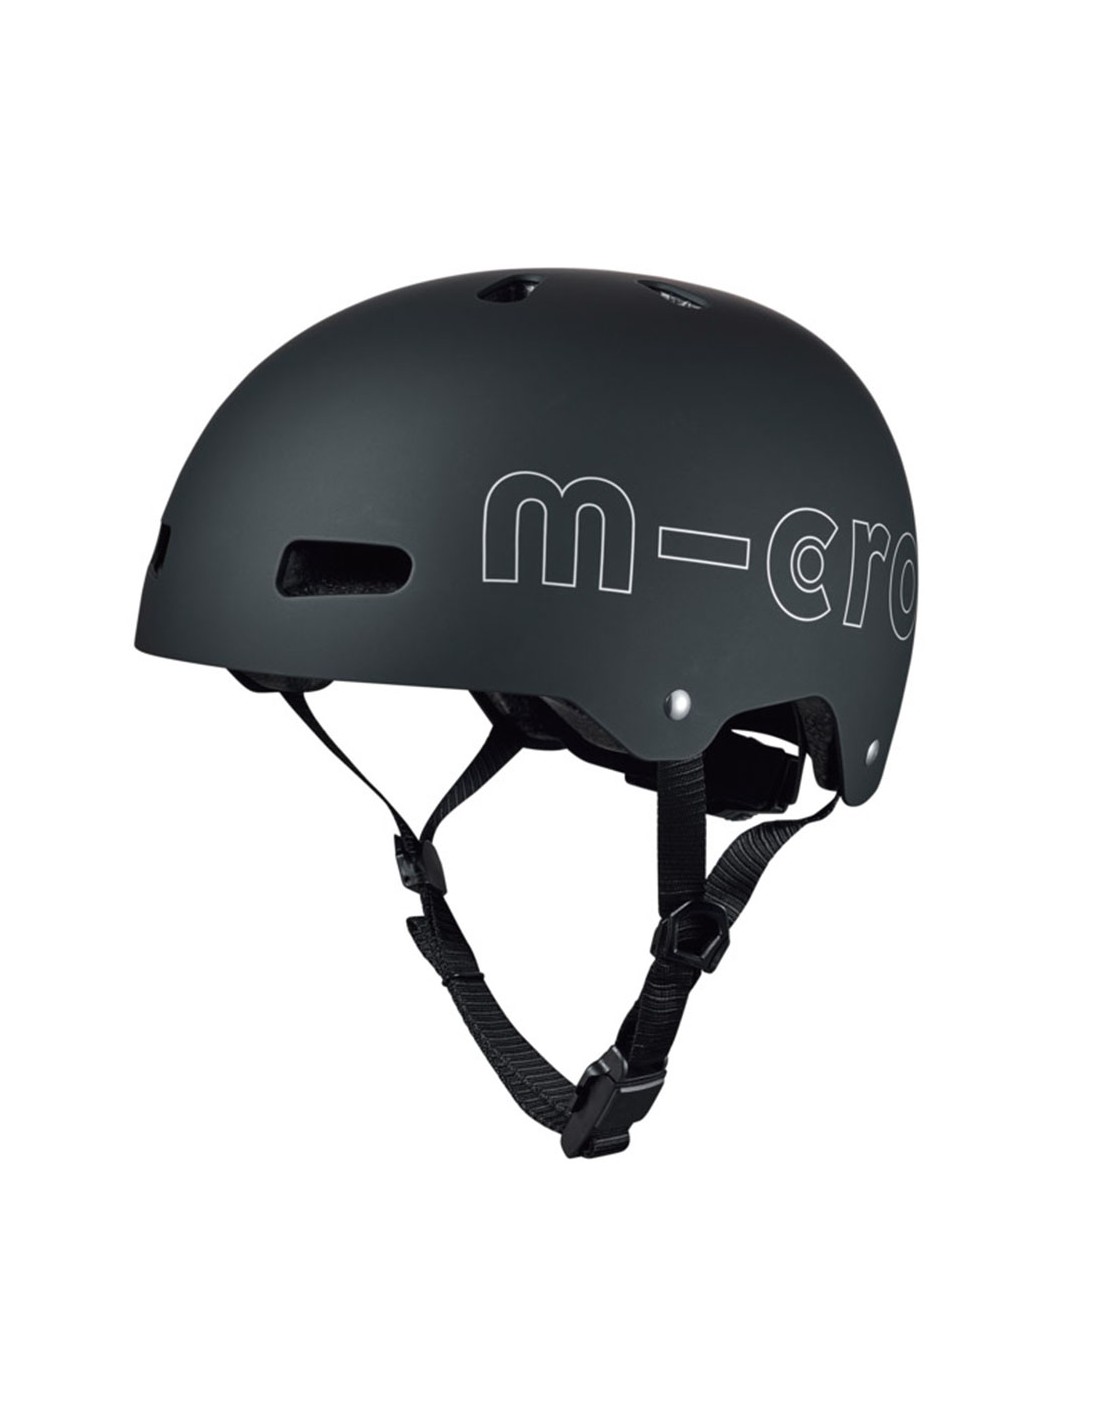 Micro Helm Black Scooterhelmgröße - L, von Micro Scooter